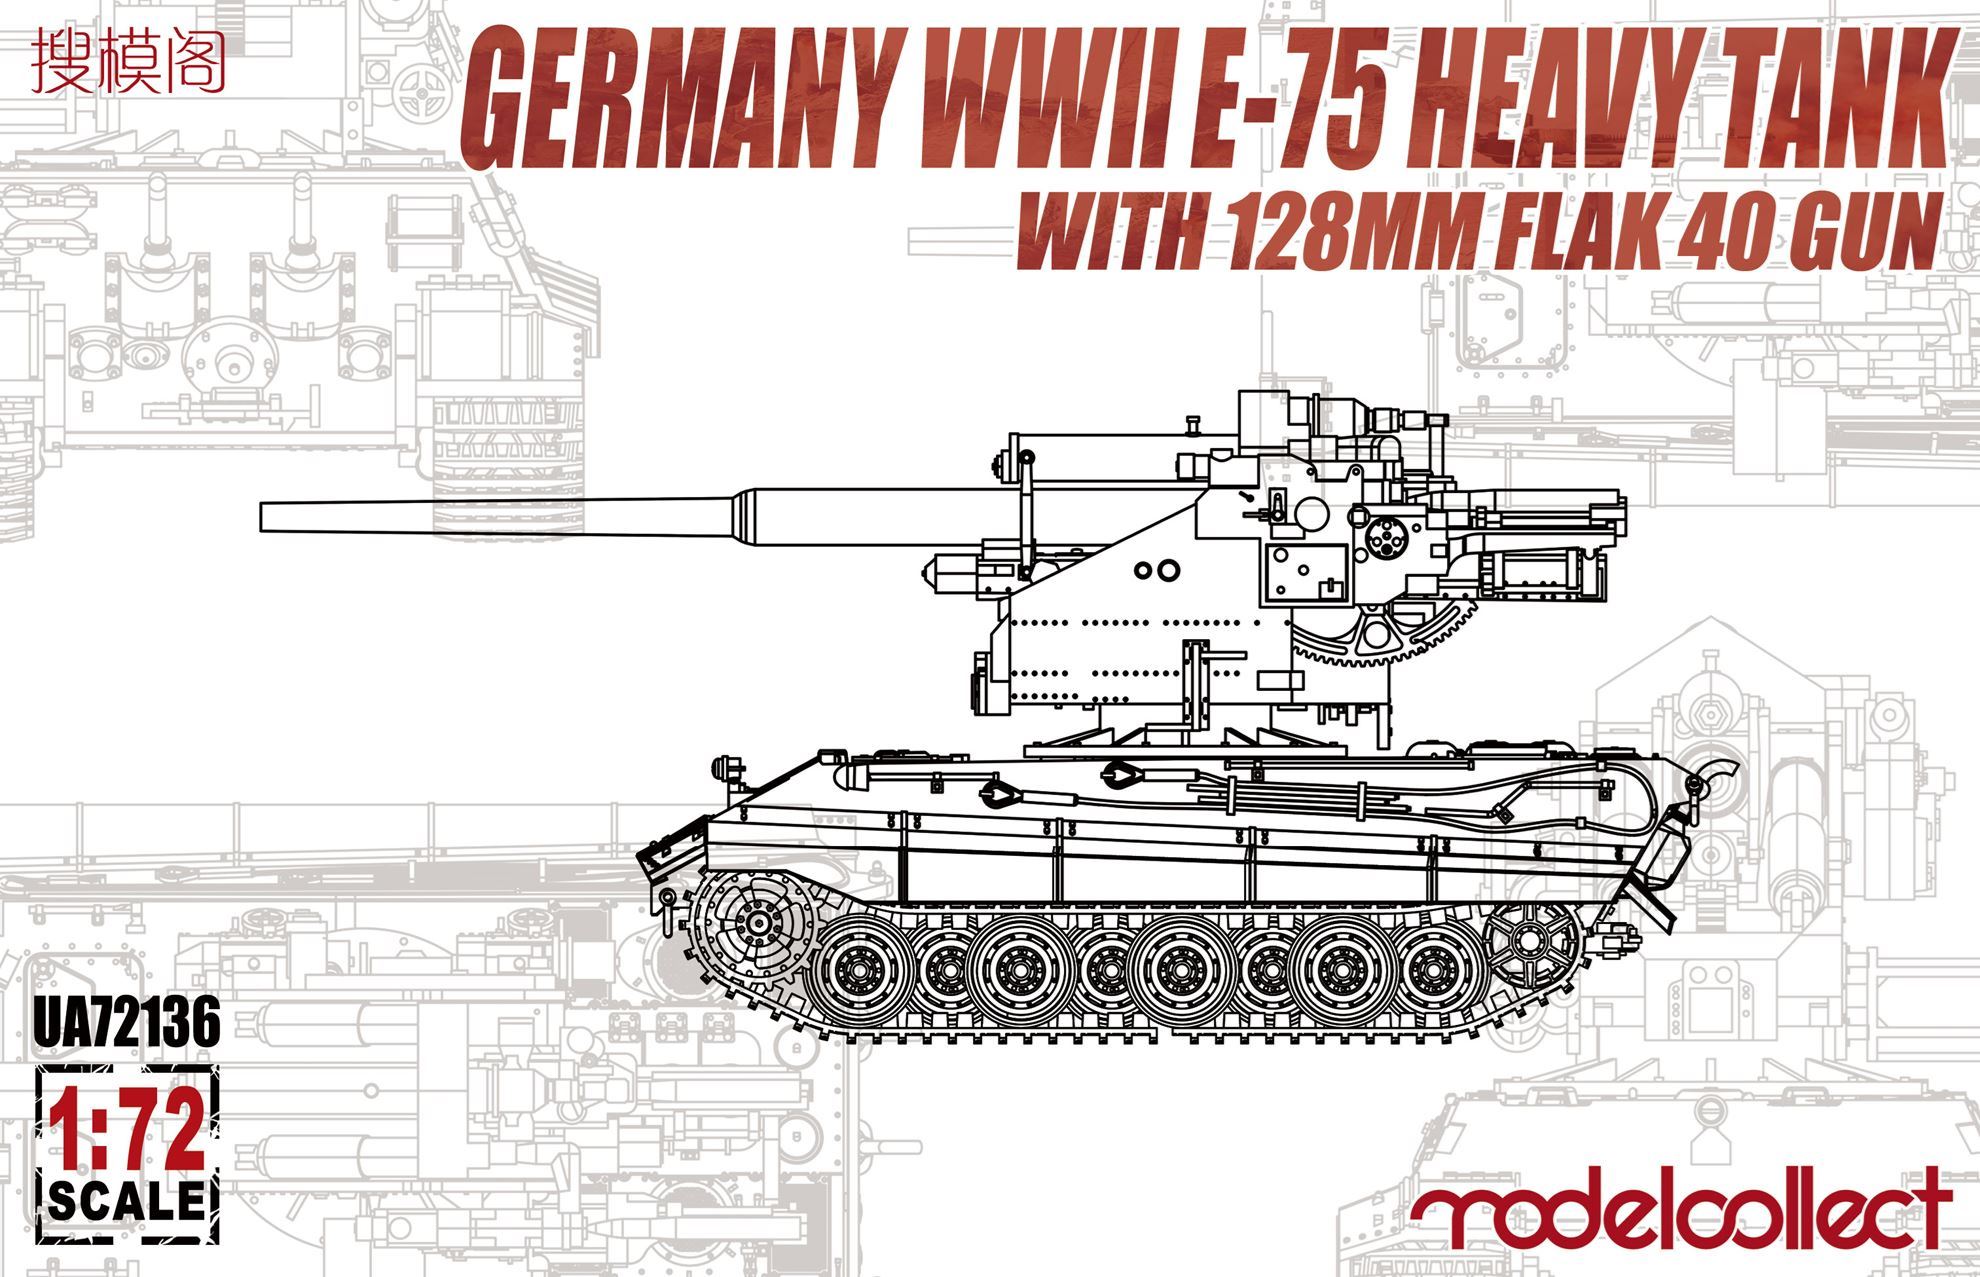 German E-75 Heavy Tank with 128mm Flak 40 gun